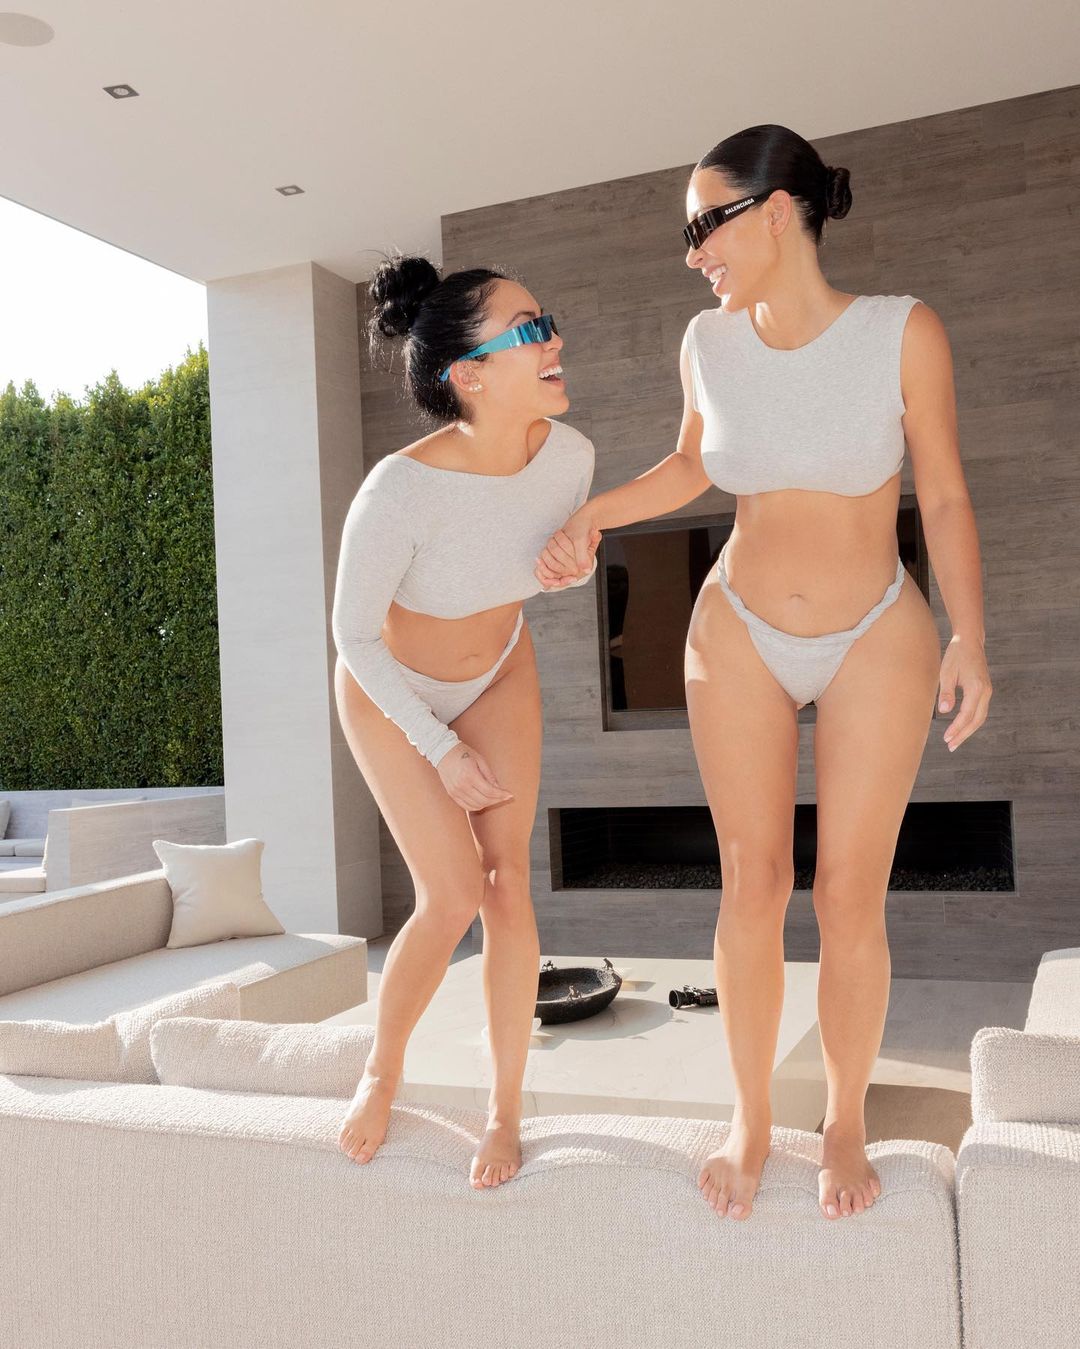 Kim Kardashian Gets Taped Up for Fashion! - Photo 37